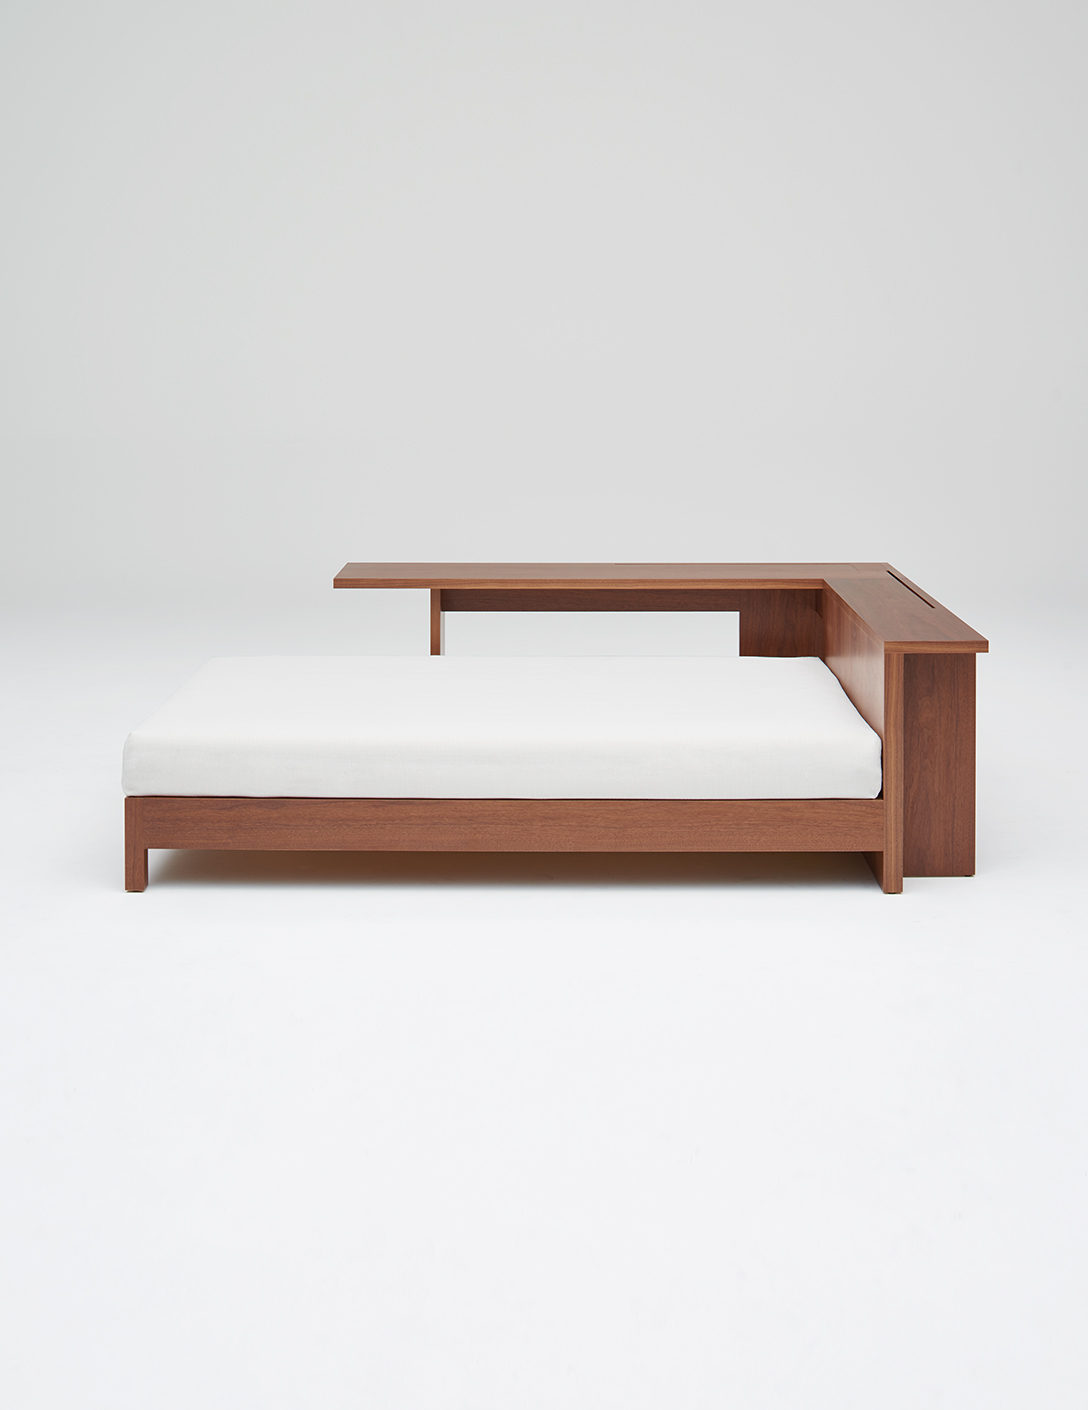 Omni-directional furniture